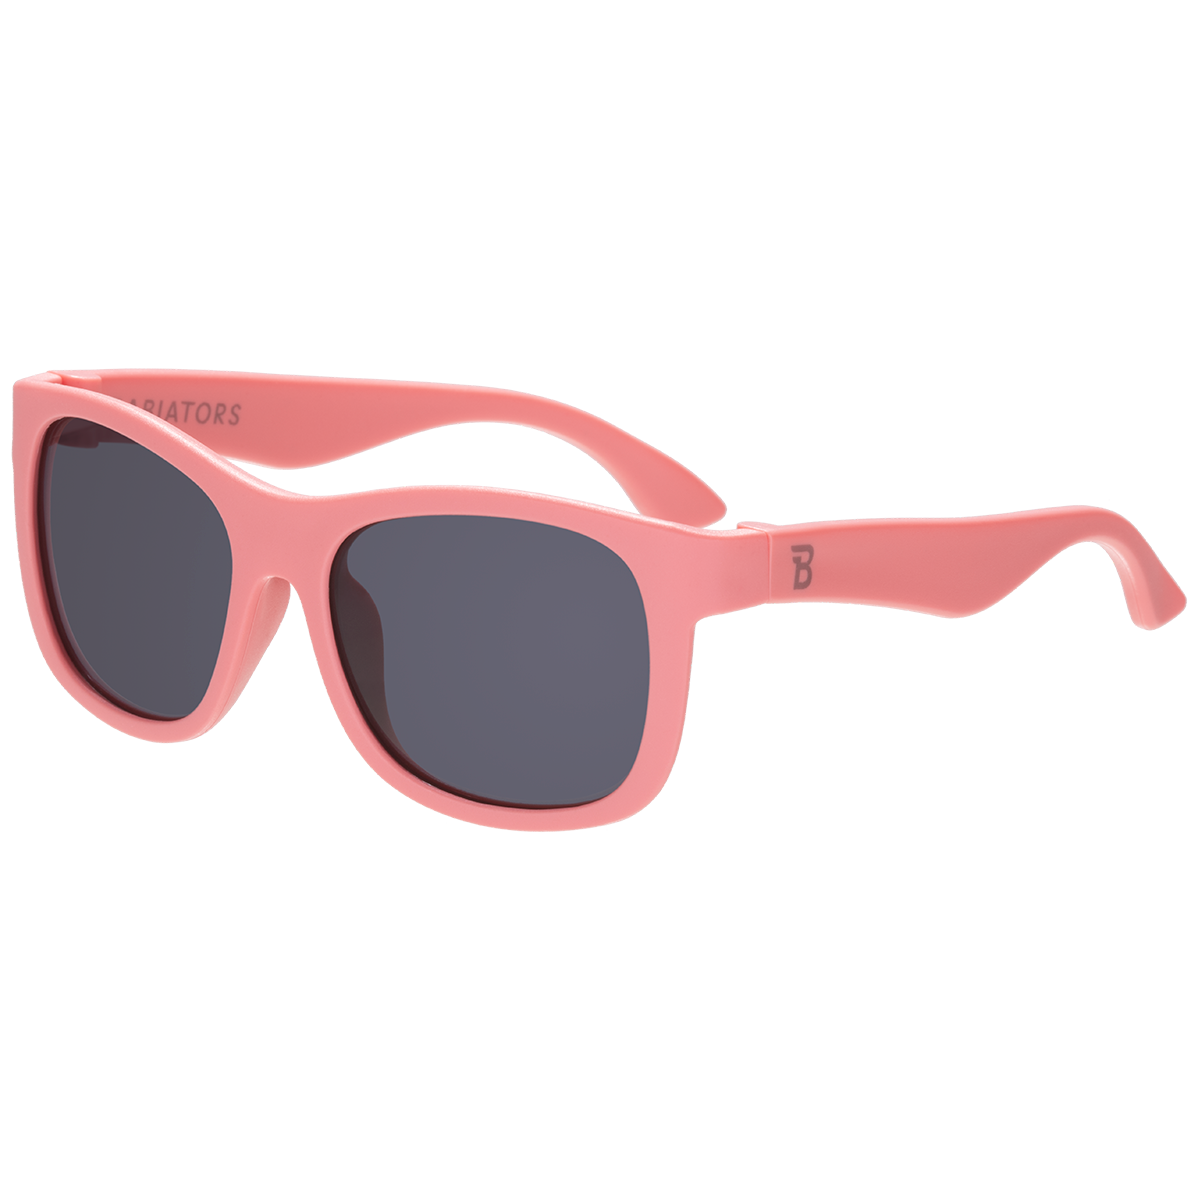 Babiators - Navigator Sunglasses in Seashell Pink: Ages 6+